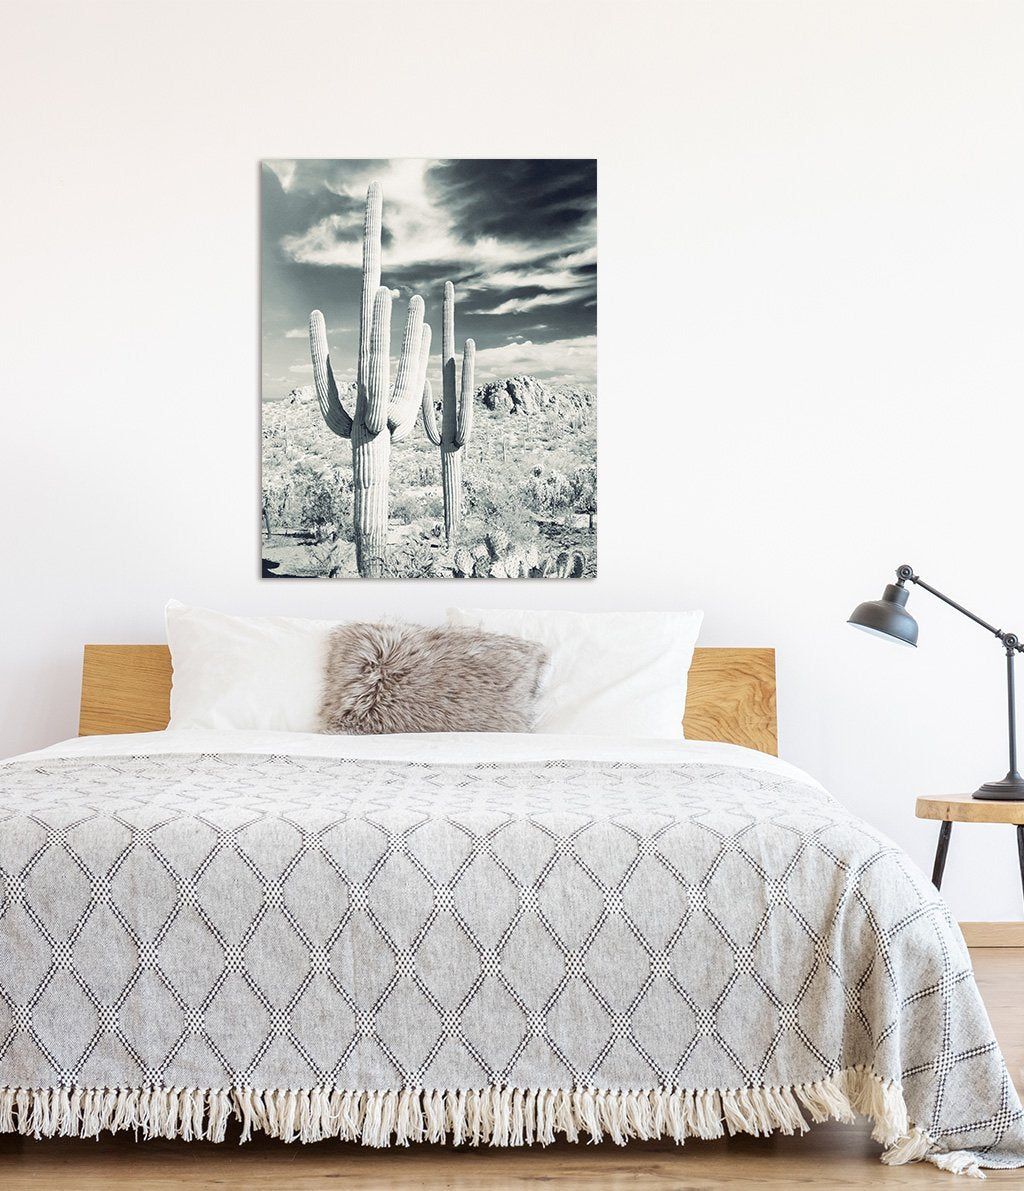 Saguaro Cactus No. 2 - Steel Blue - The Crown Prints